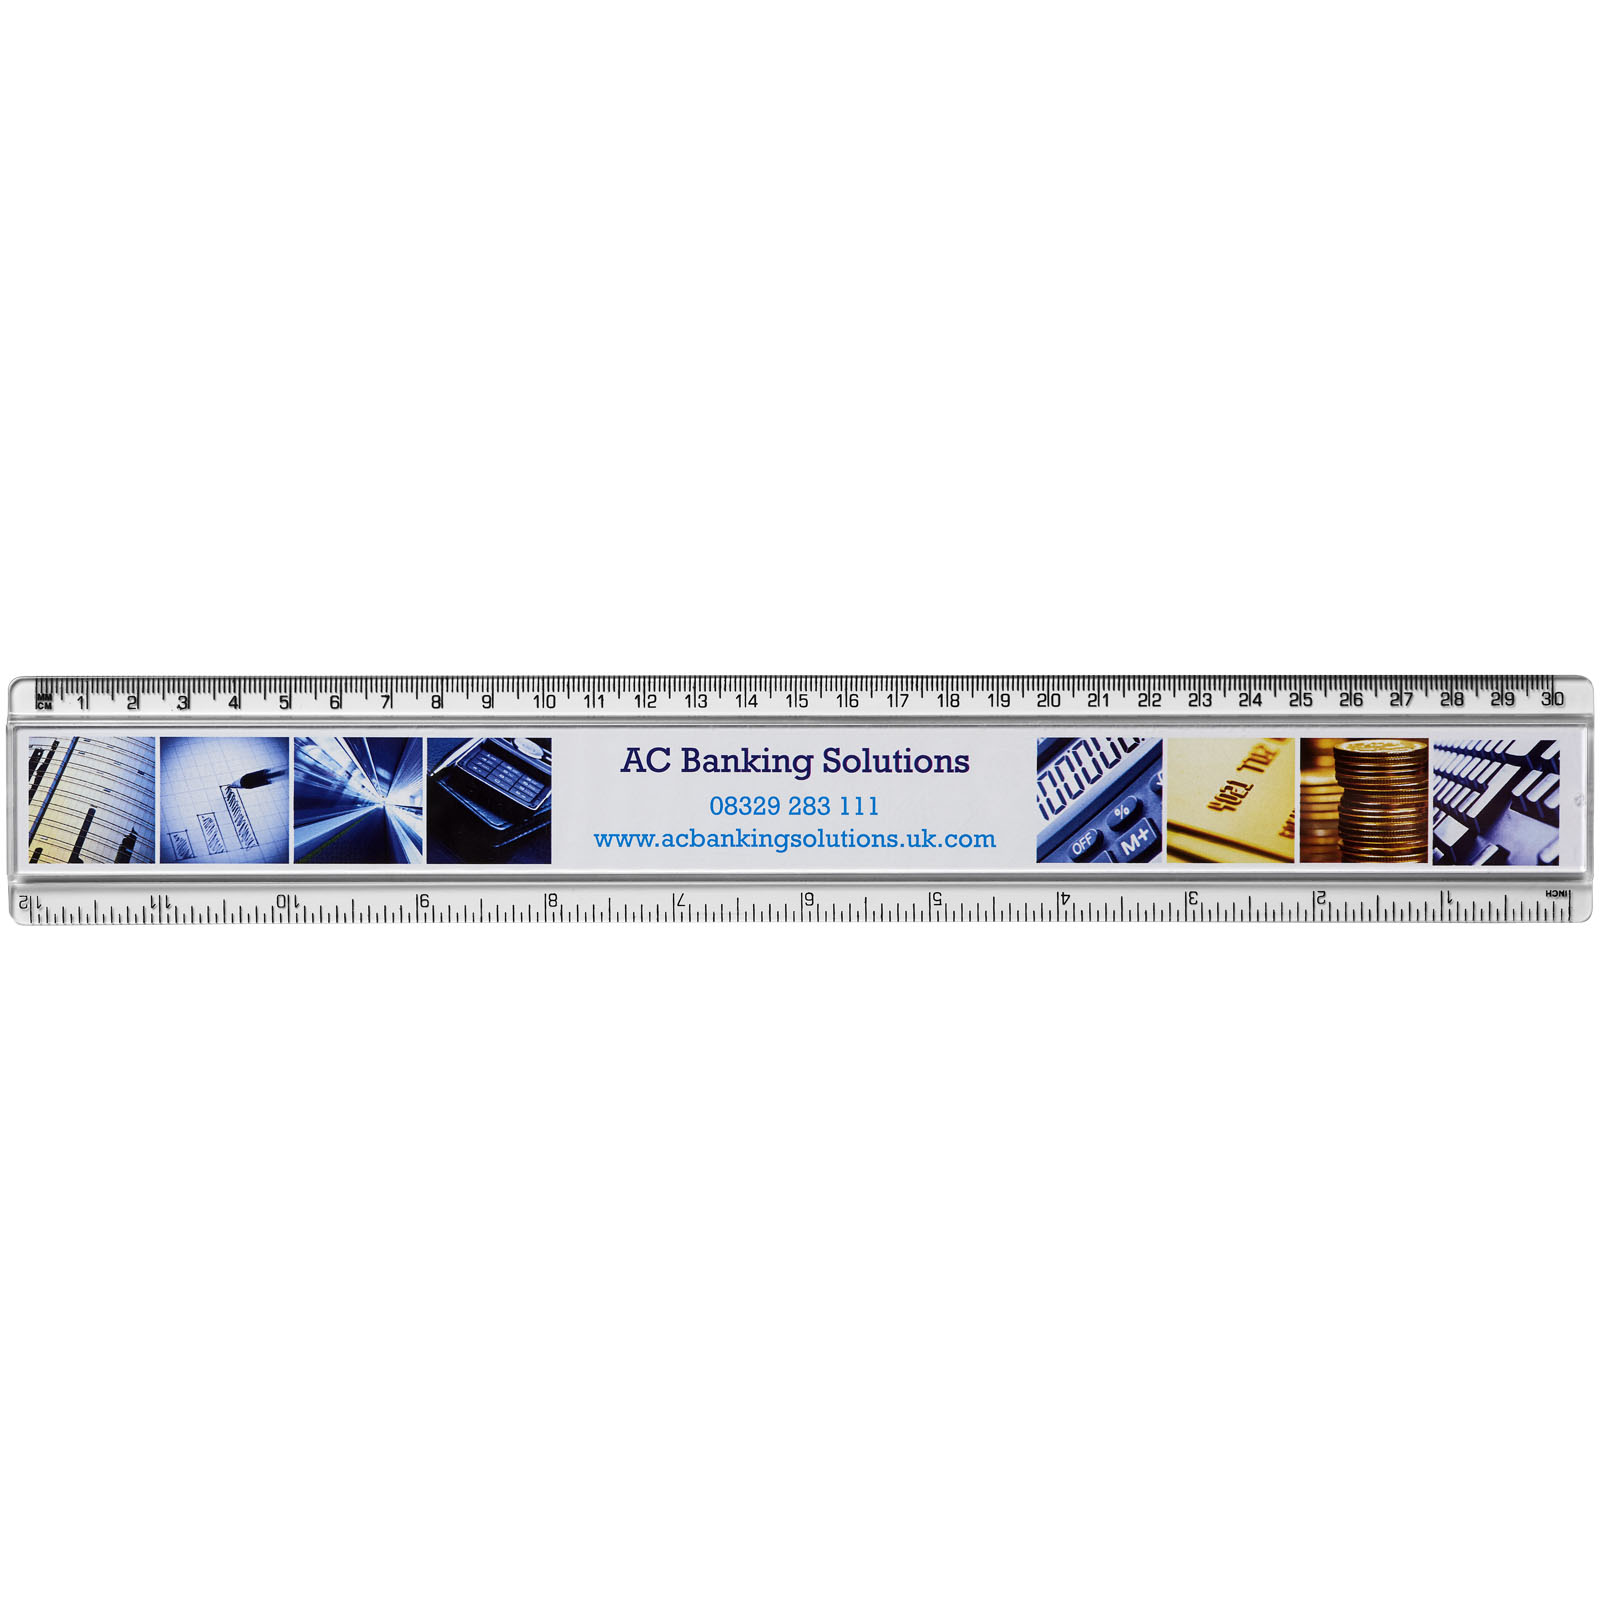 Advertising Desk Accessories - Ellison 30 cm plastic insert ruler - 1